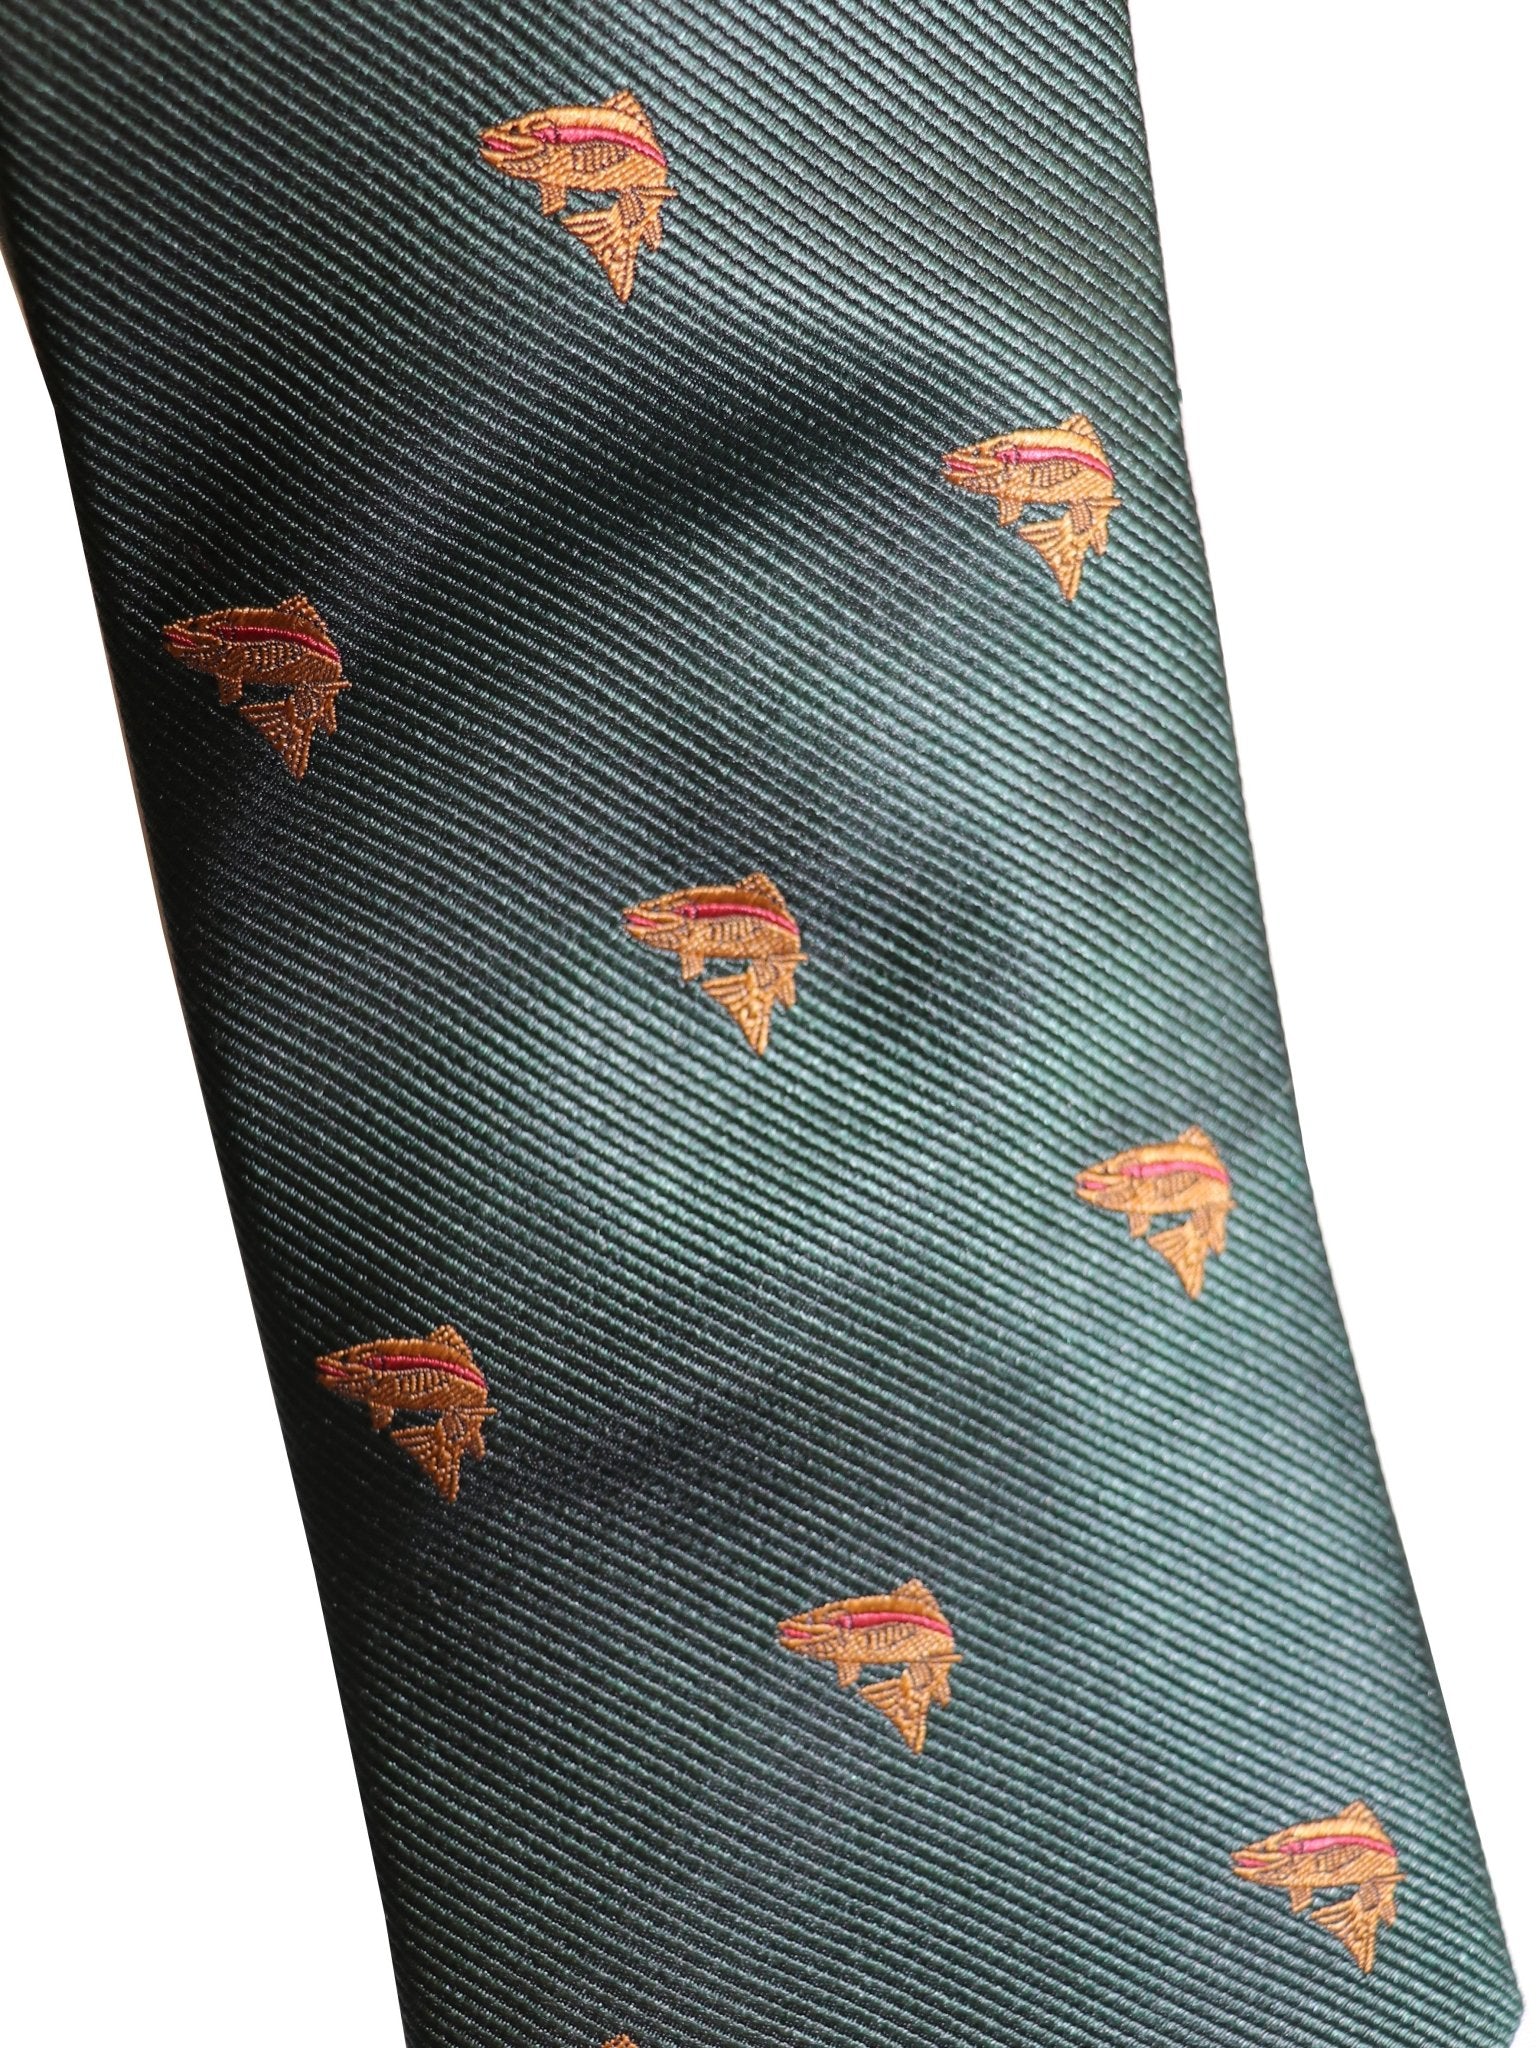 Harry Knight Esq. Trout Tie - Thomson's Suits Ltd - Forest - - 55067